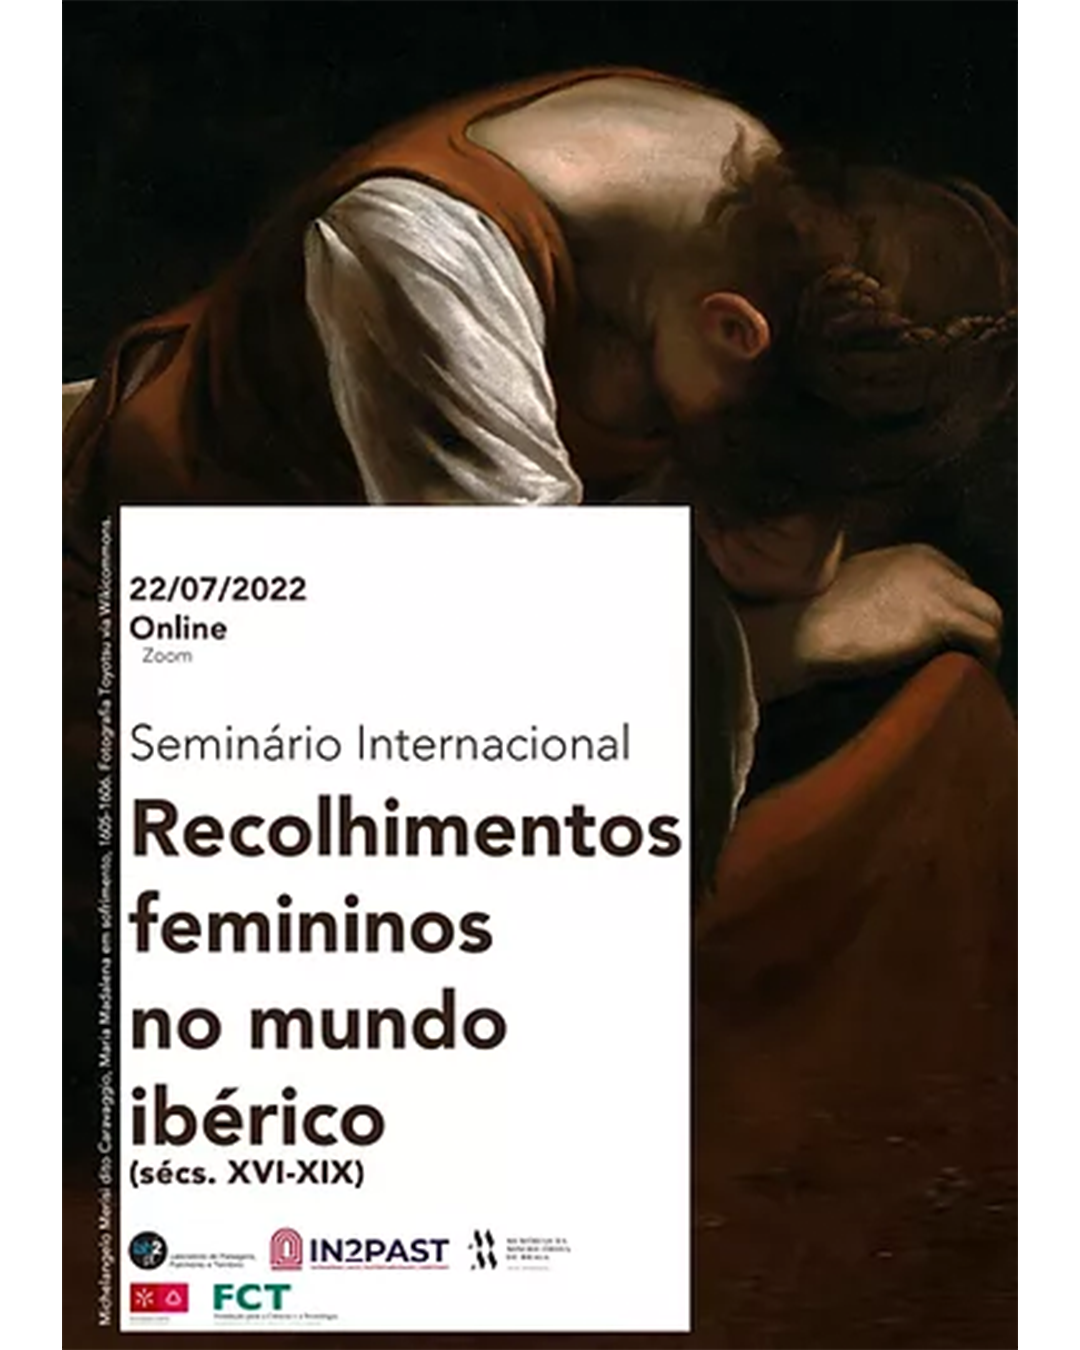 Seminário Internacional "Recolhimentos femininos no mundo ibérico (séculos XVI-XIX)" image